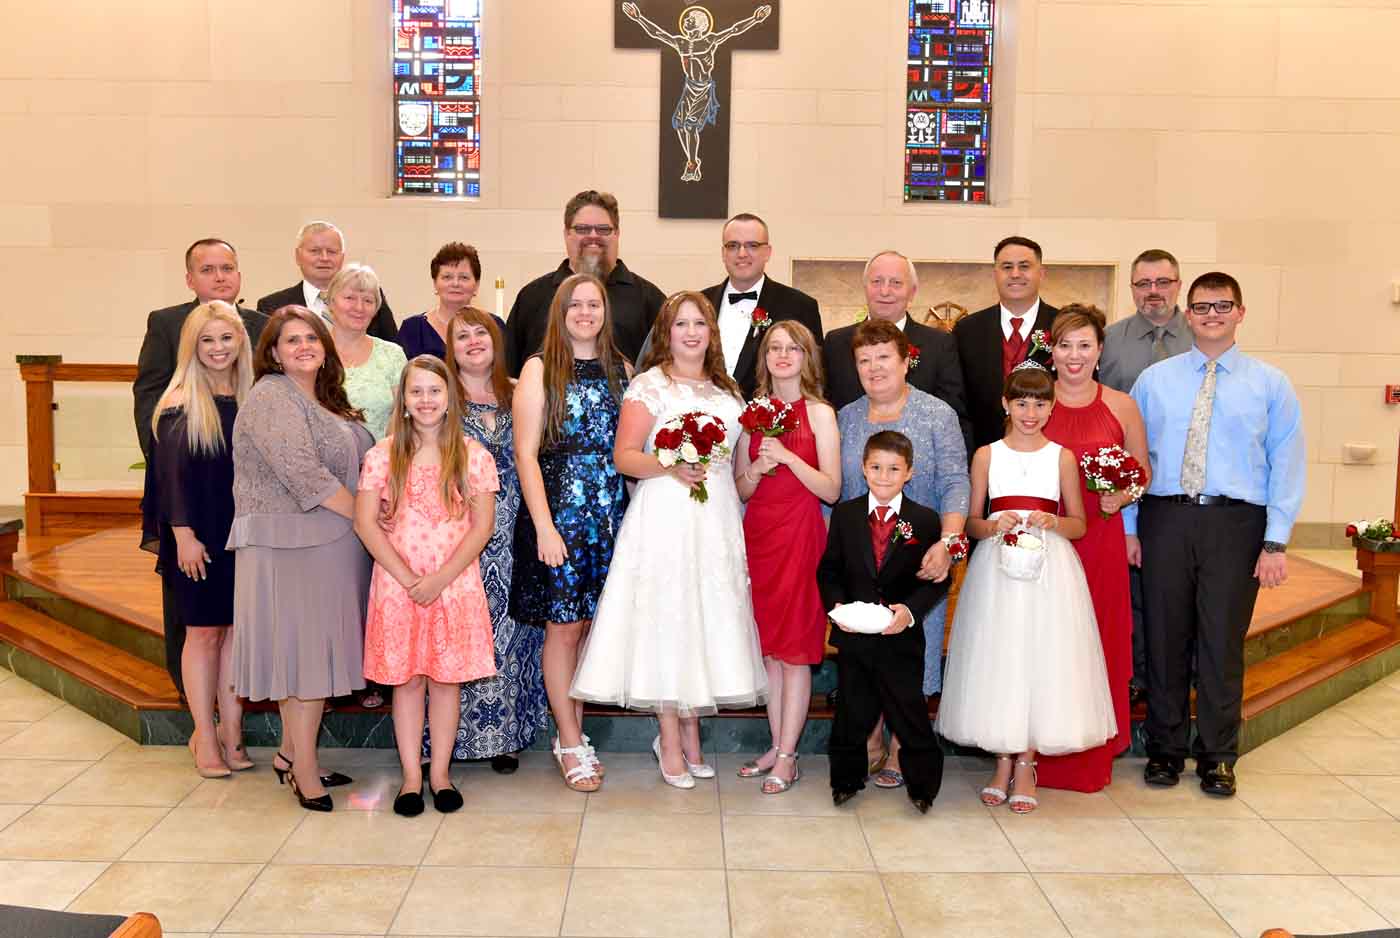 Group wedding photo on alter